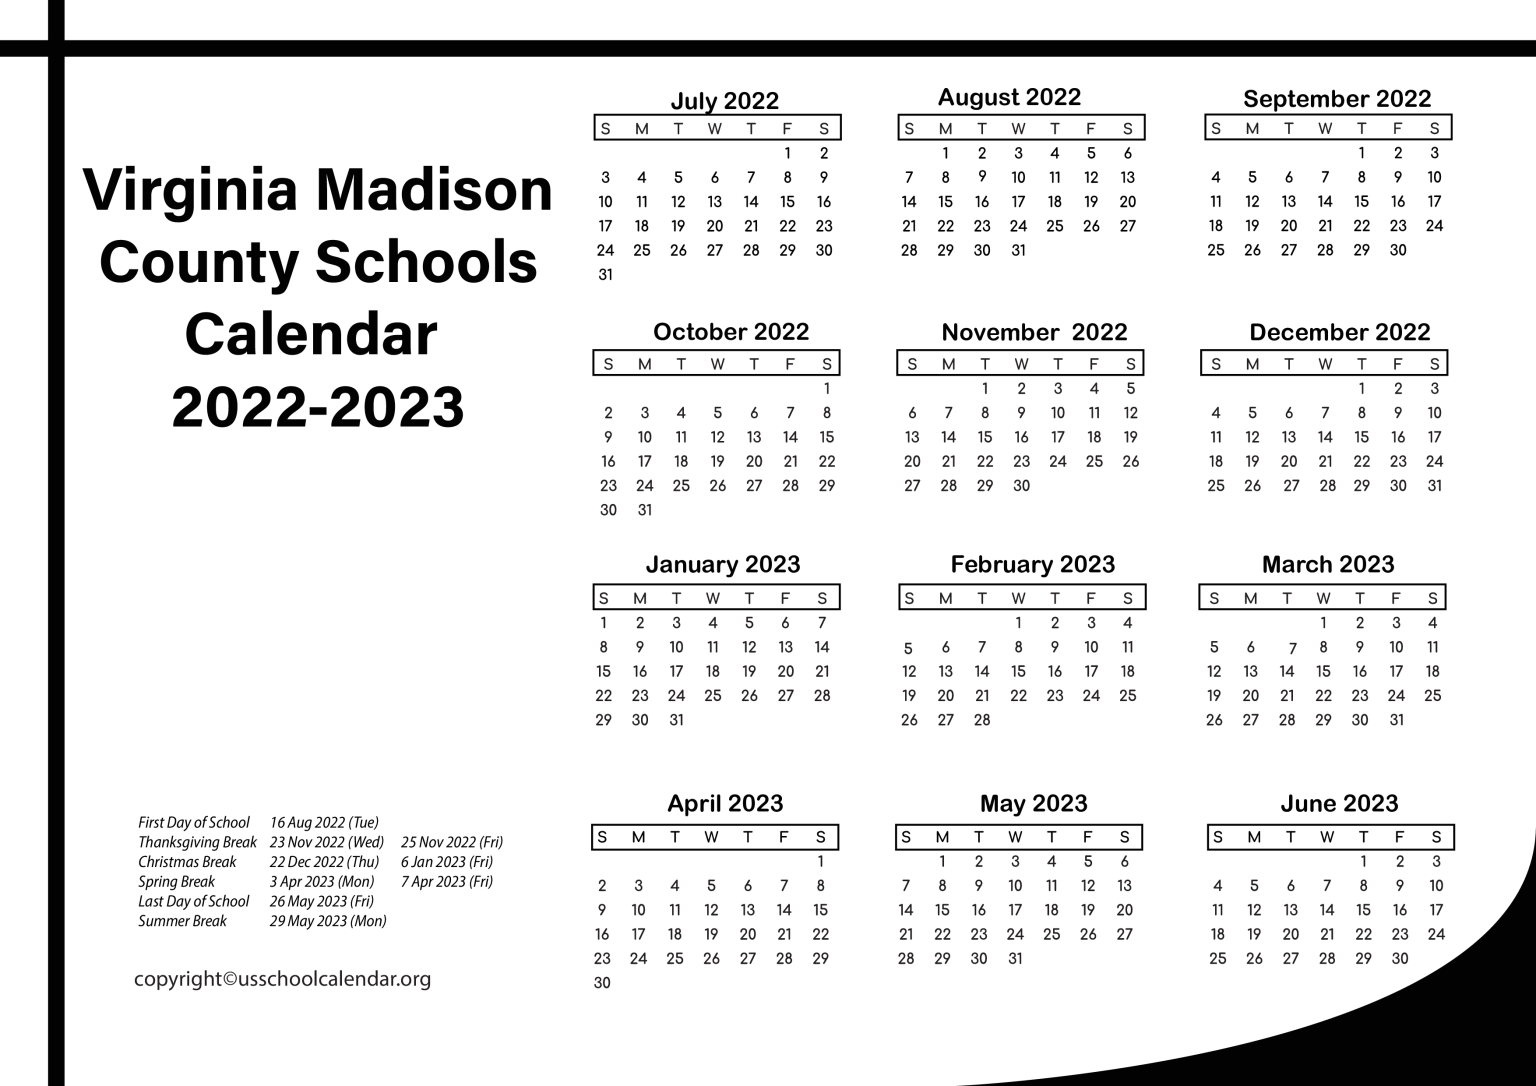 lee-county-school-calendar-2022-to-2023-t2023g